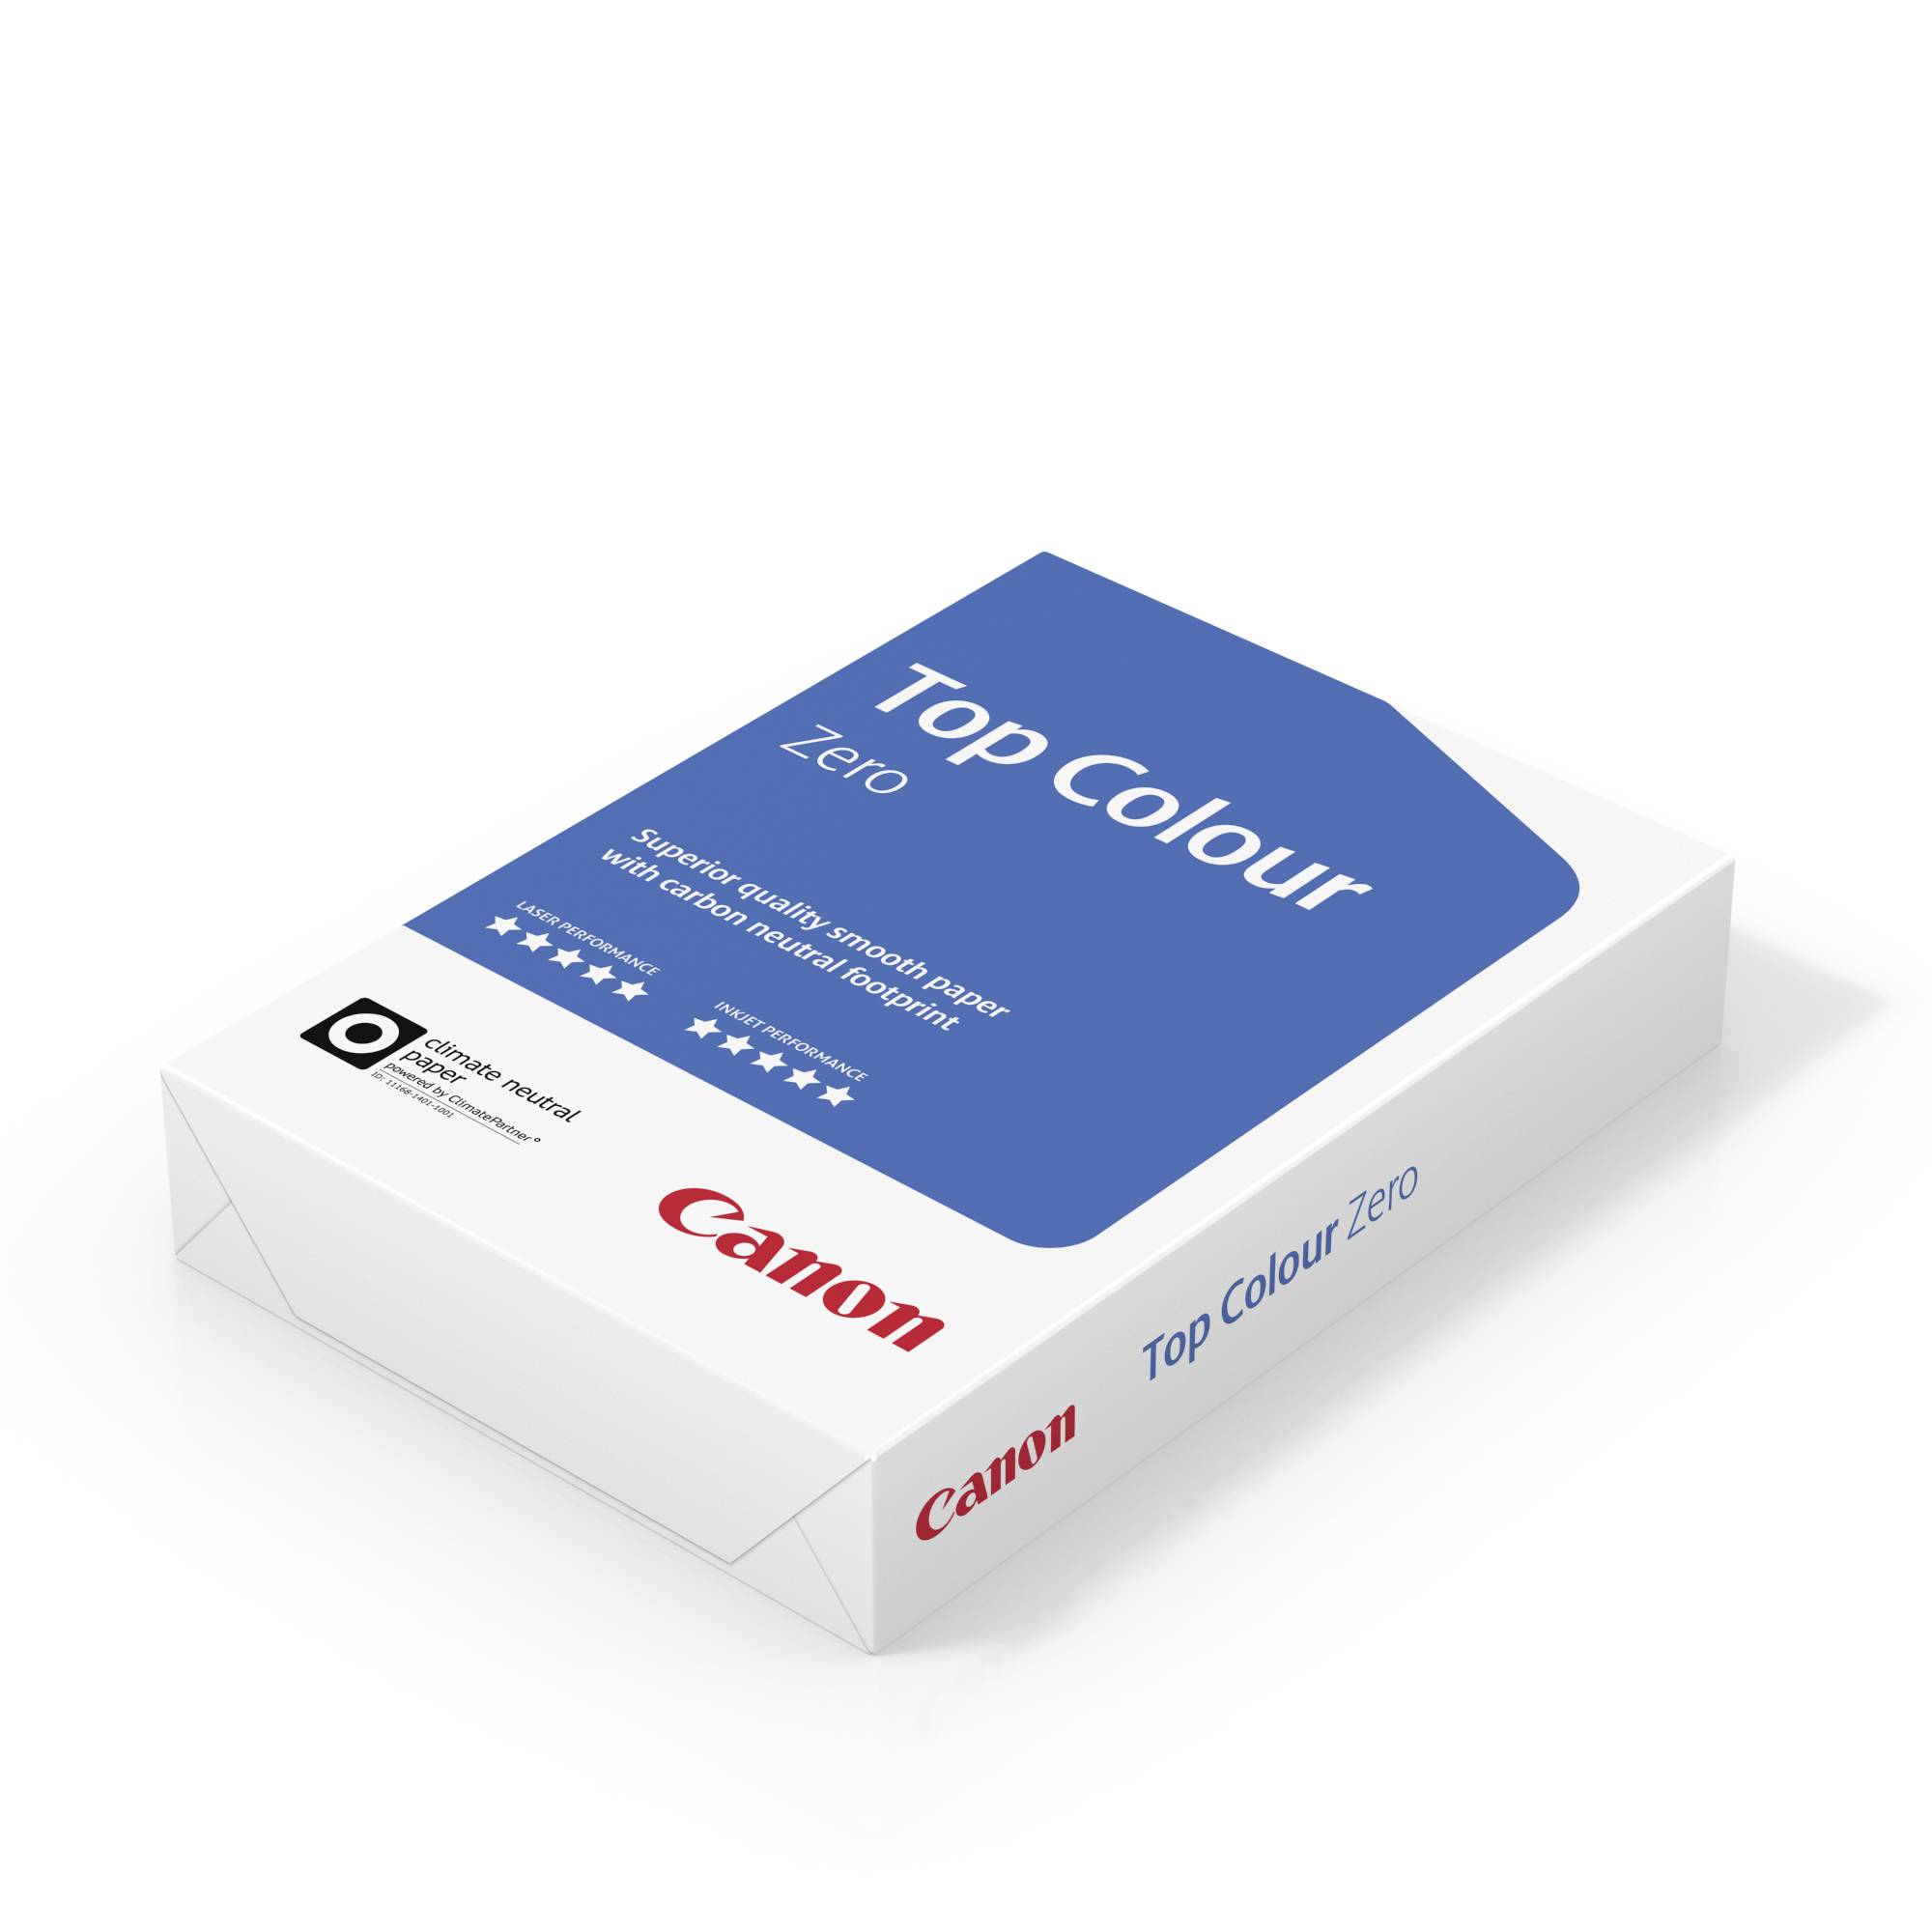 CANON Océ Top Color Paper FSC SAT013 - almin